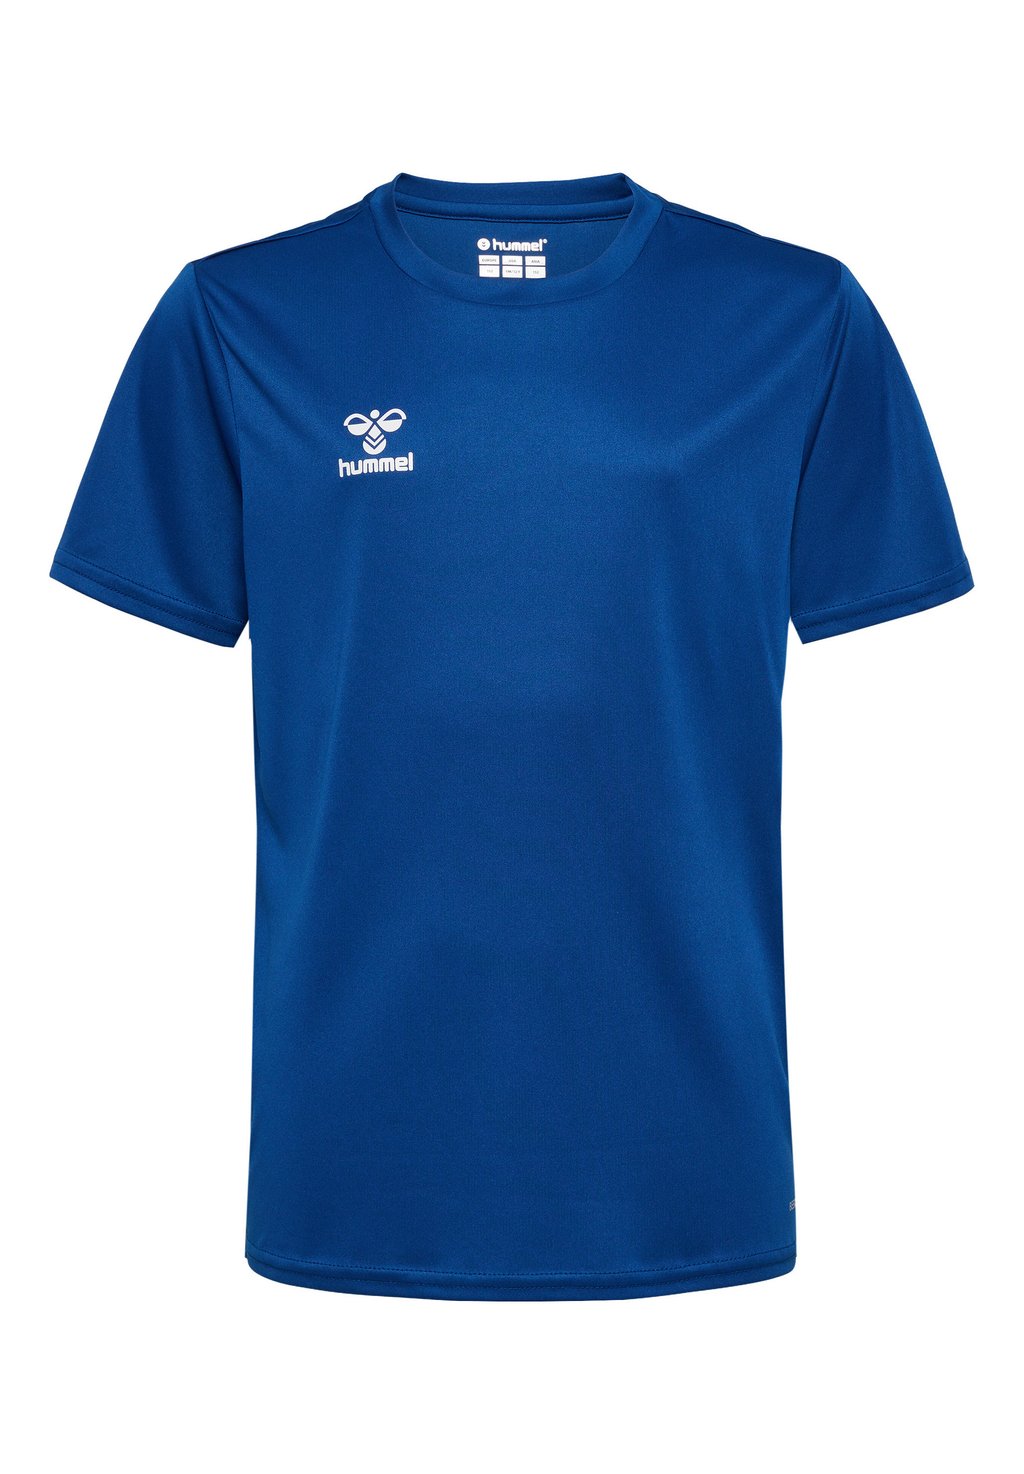 Футболка базовая ESSENTIAL SS Hummel, цвет true blue базовая футболка essential ss hummel черный